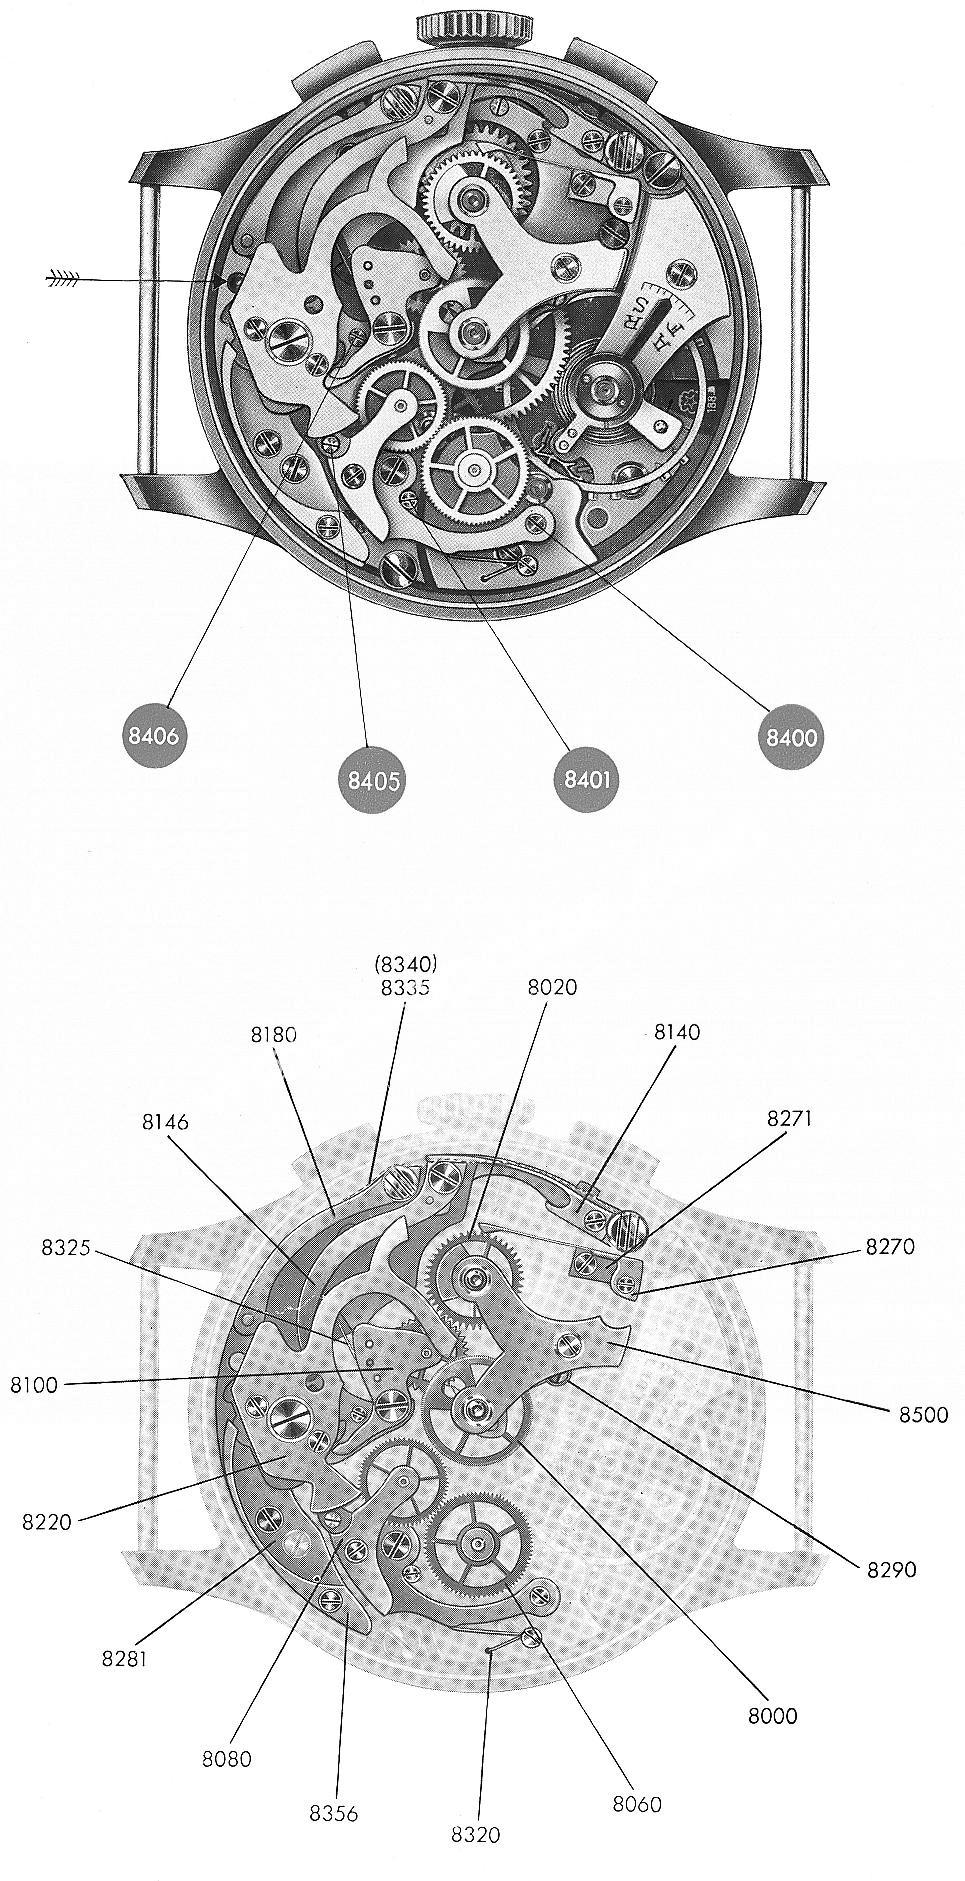 Venus 188 watch chronograph spare parts